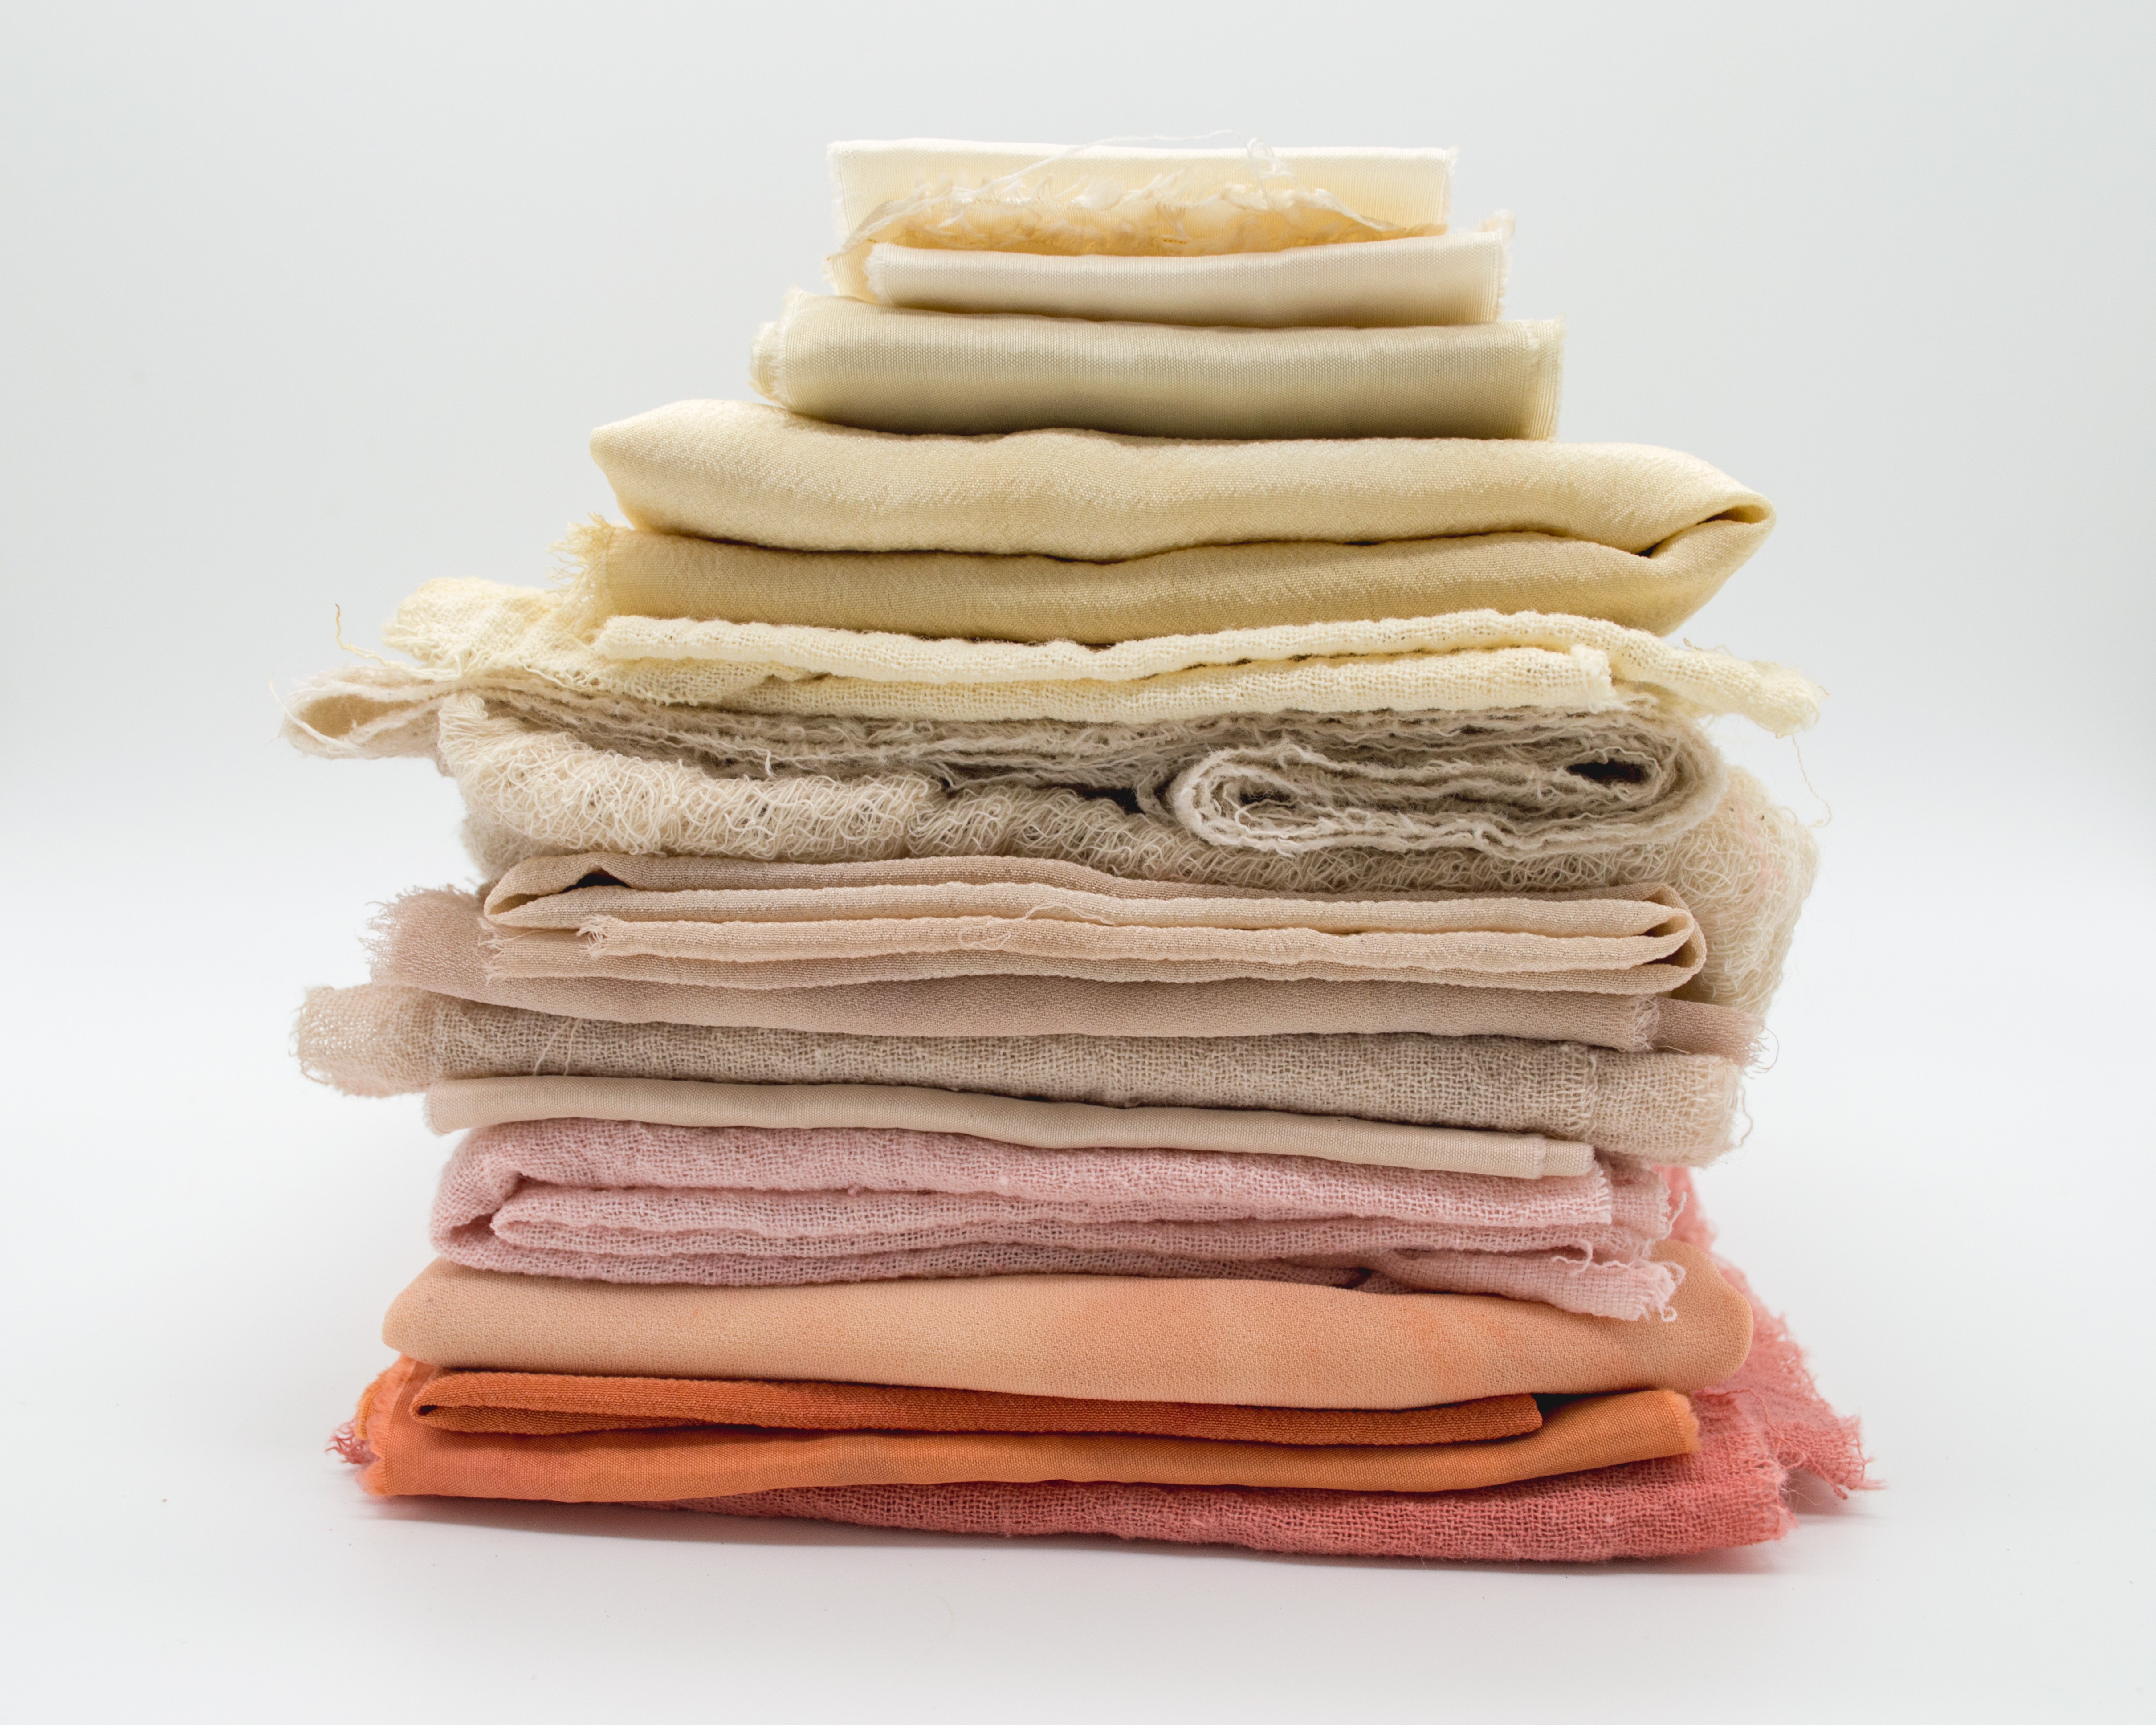 Cotton blended fabrics